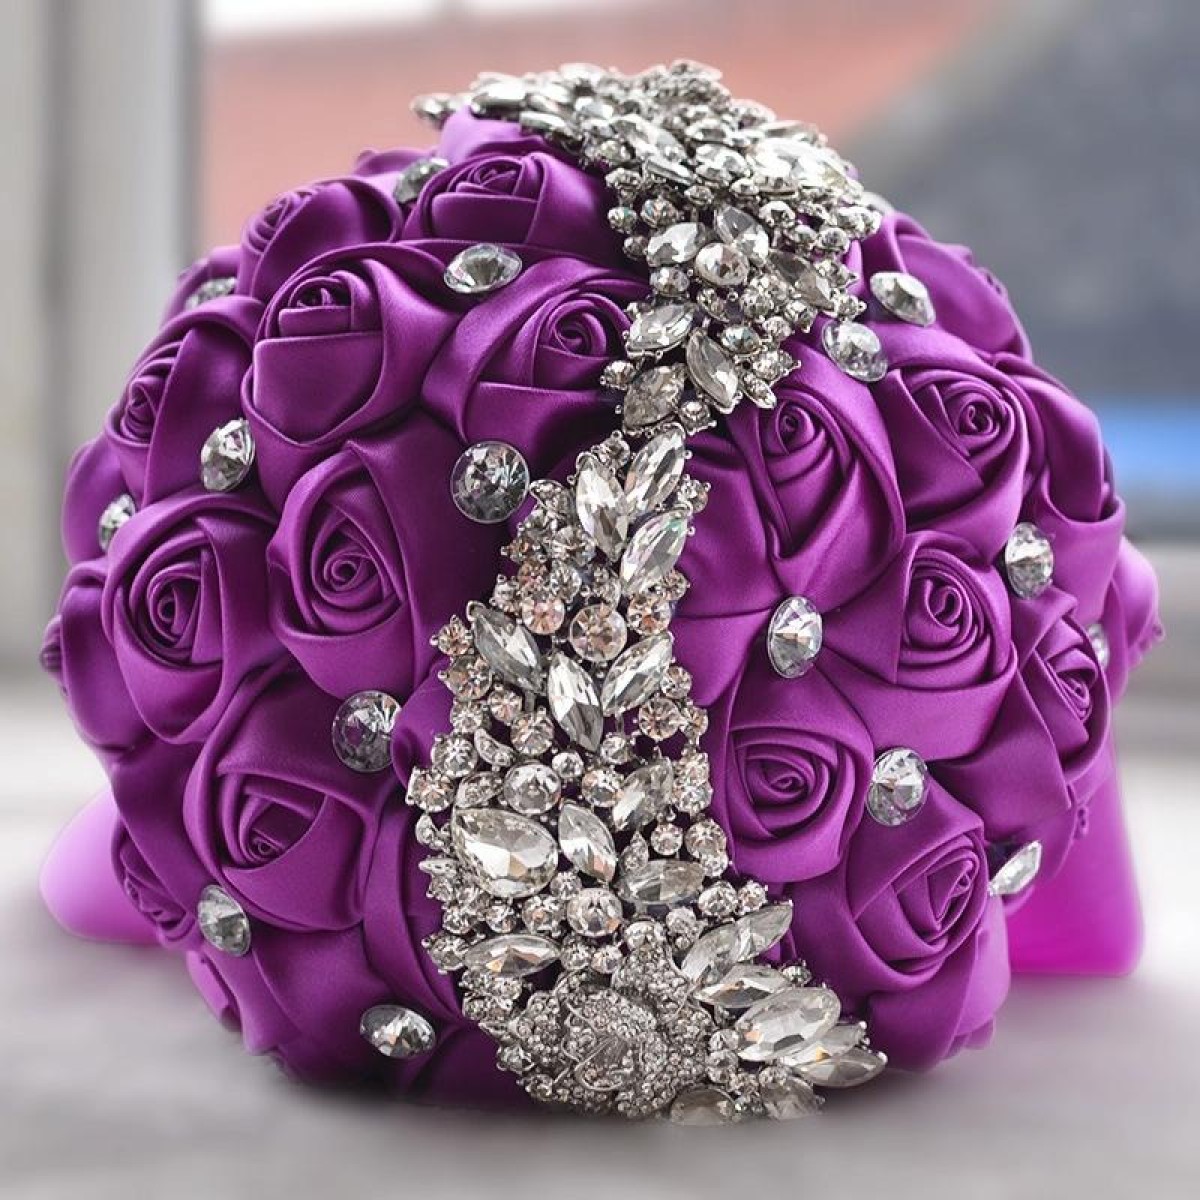 Wedding Holding Flowers Bridal Bouquet Accessories Bridesmaid Rhinestone Party Wedding Decoration Supplies(Purple)